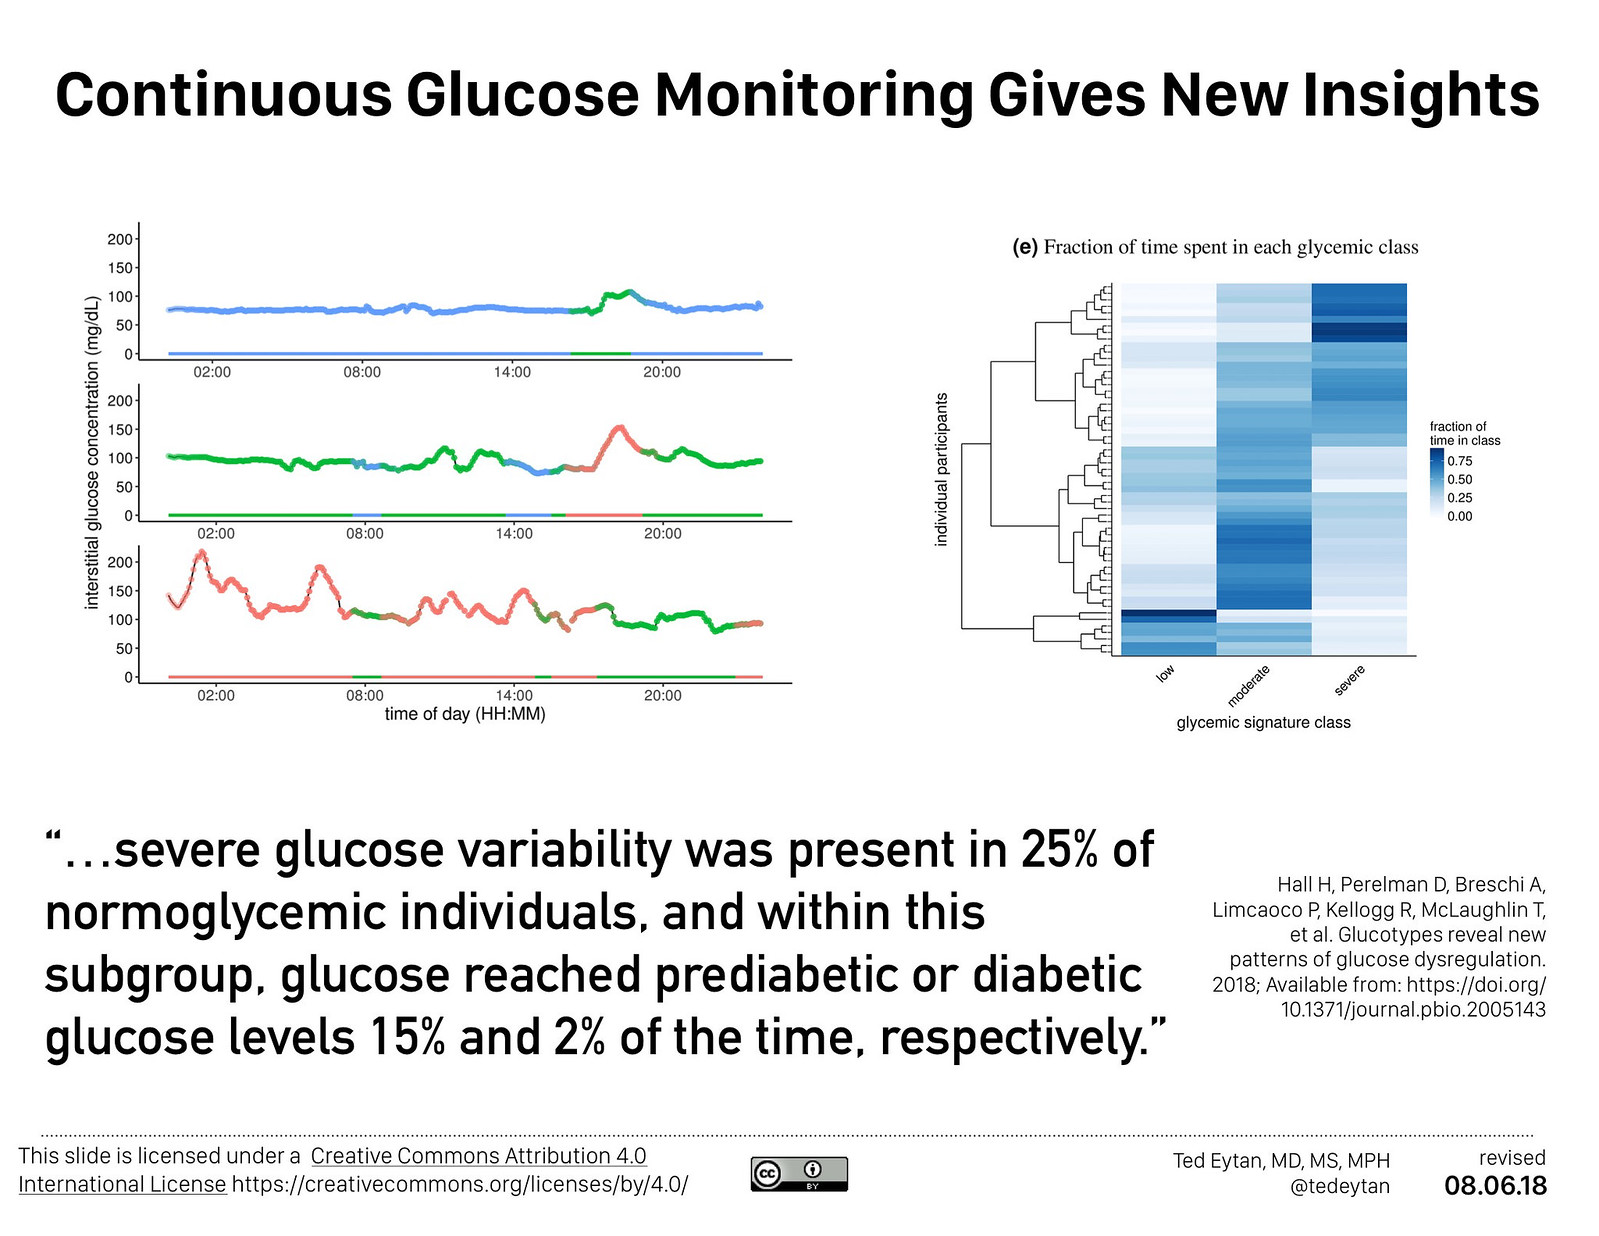 2018.08.06 Glucotypes reveal new patterns of glucose dysregulation 510